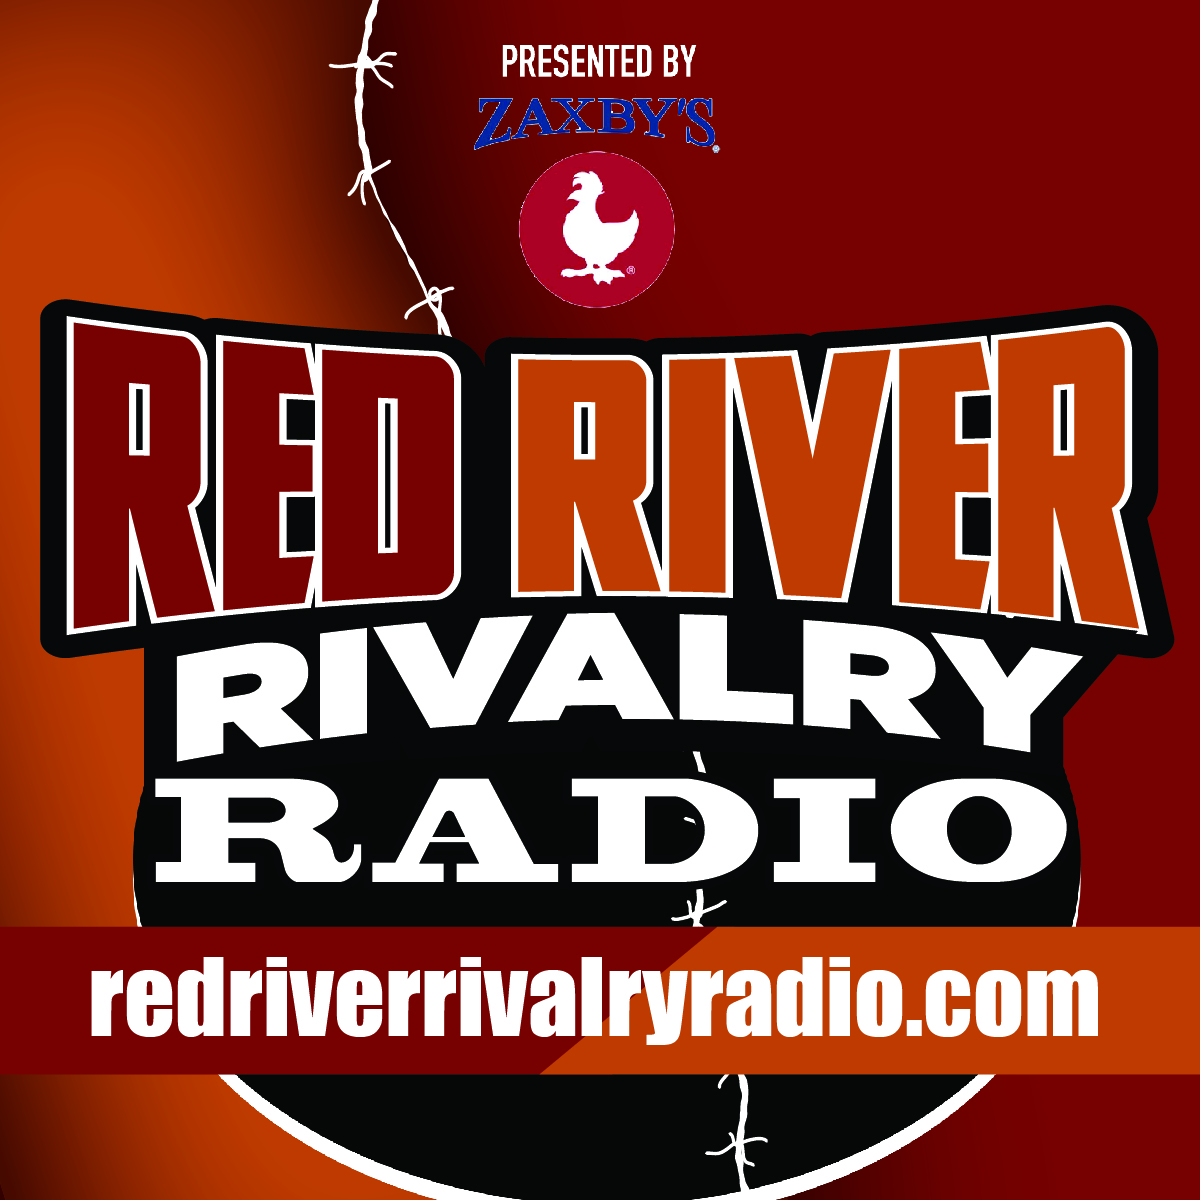 Red River Rivalry - 2018